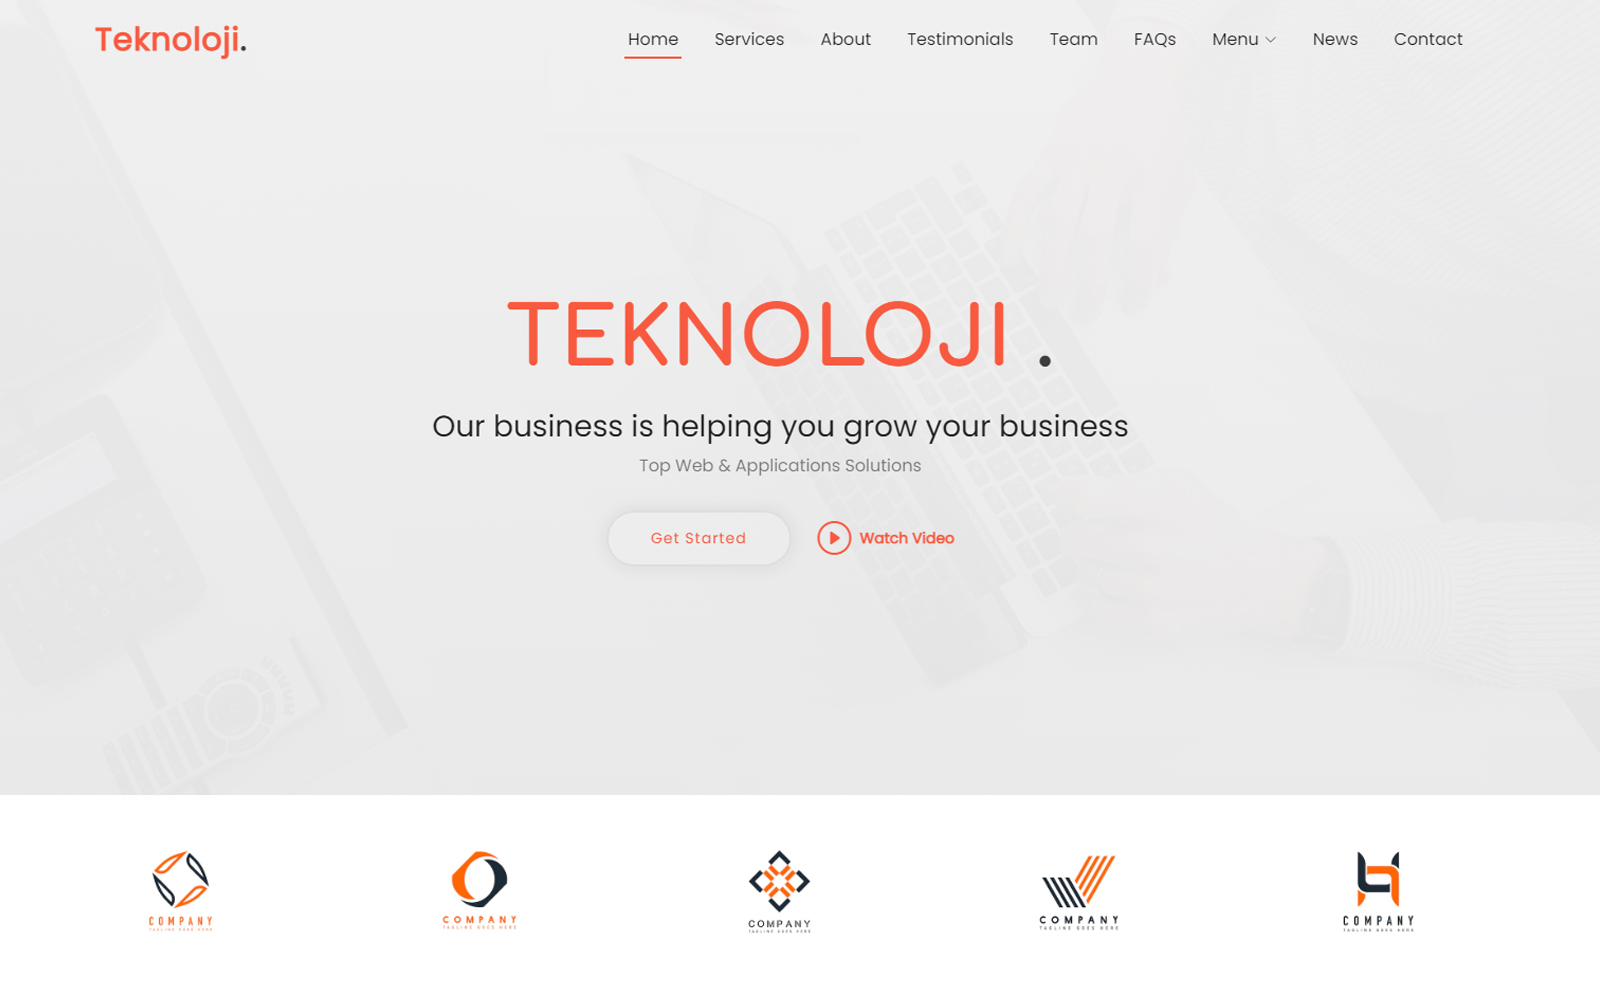 Teknoloji - Business Services & Technology Landing Page Template